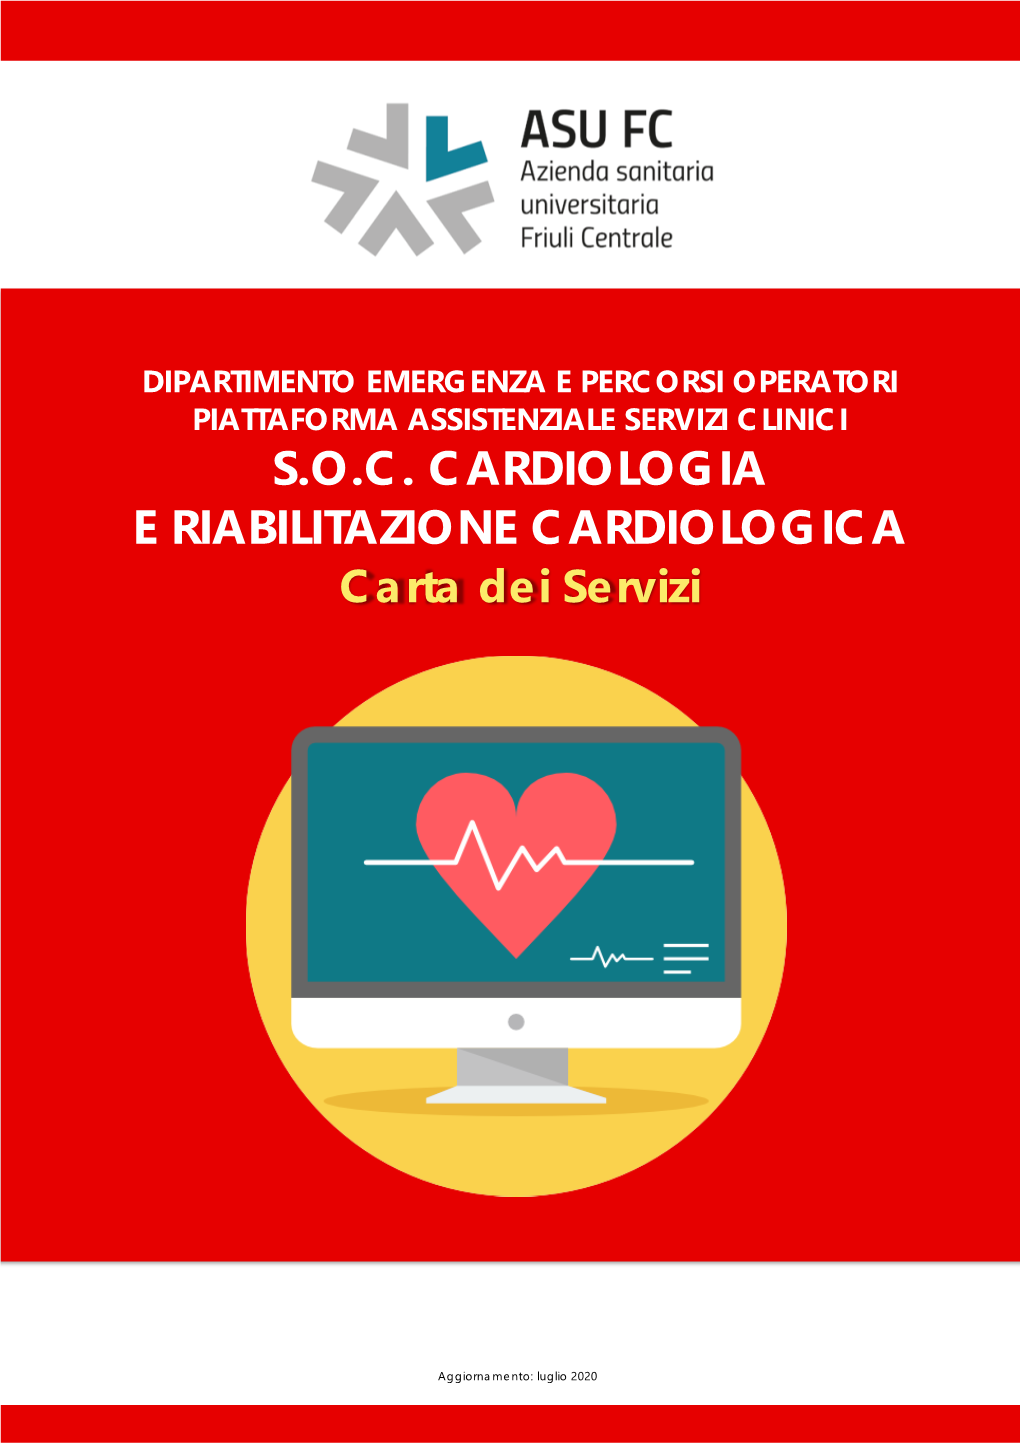 S.O.C. CARDIOLOGIA E RIABILITAZIONE CARDIOLOGICA Carta Dei Servizi